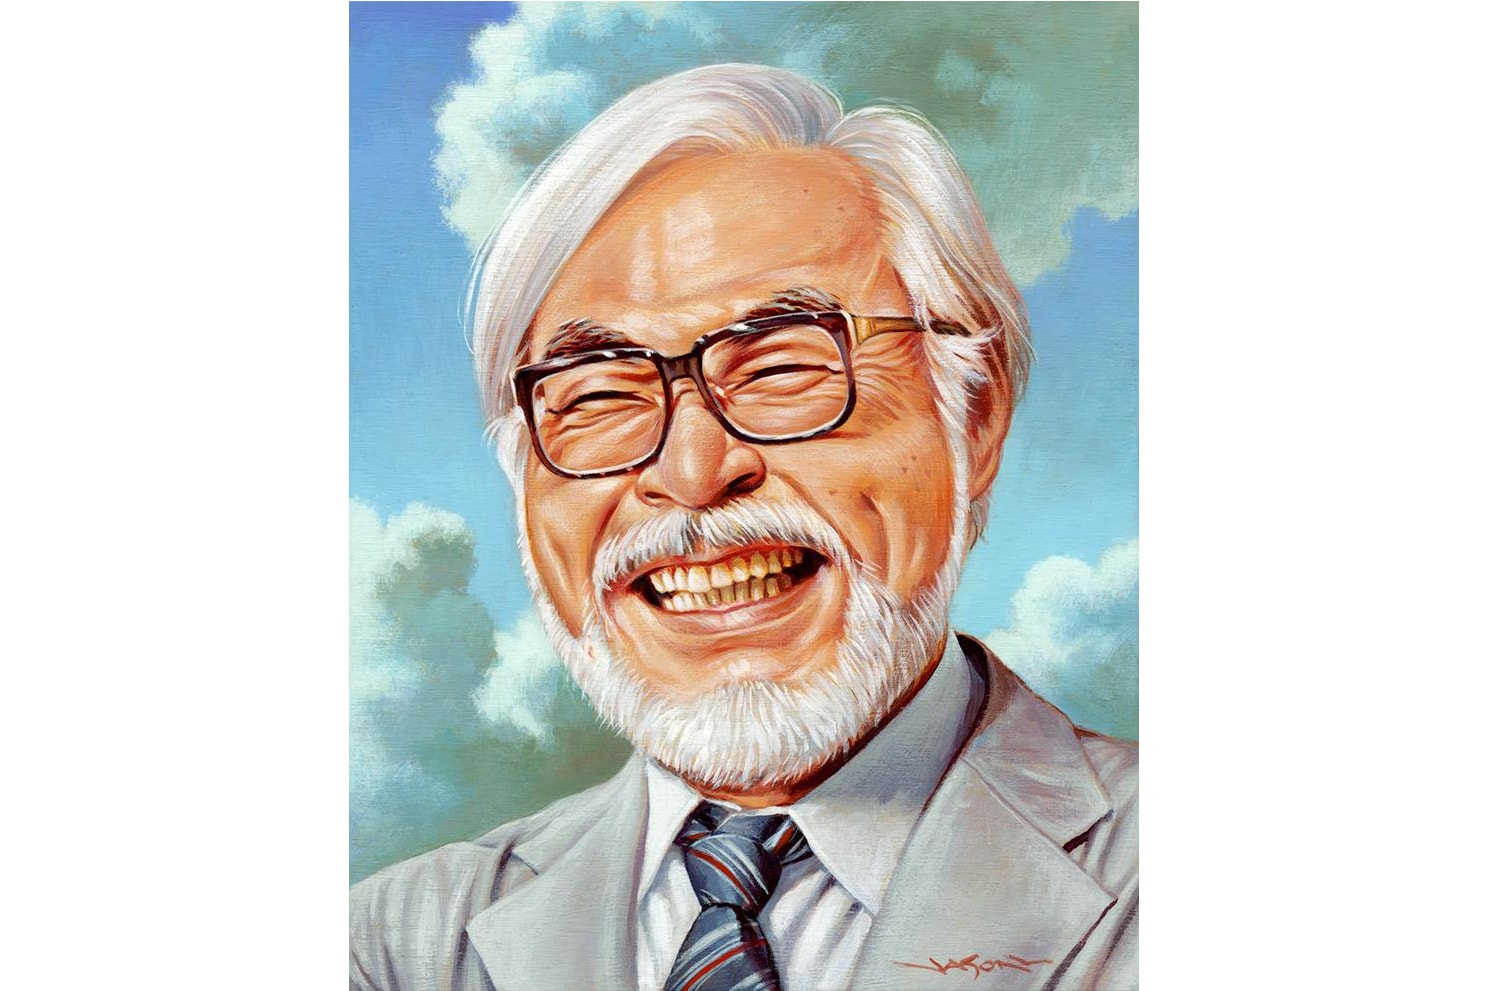 Studio Ghibli's Hayao Miyazaki Spoke Art Tribute